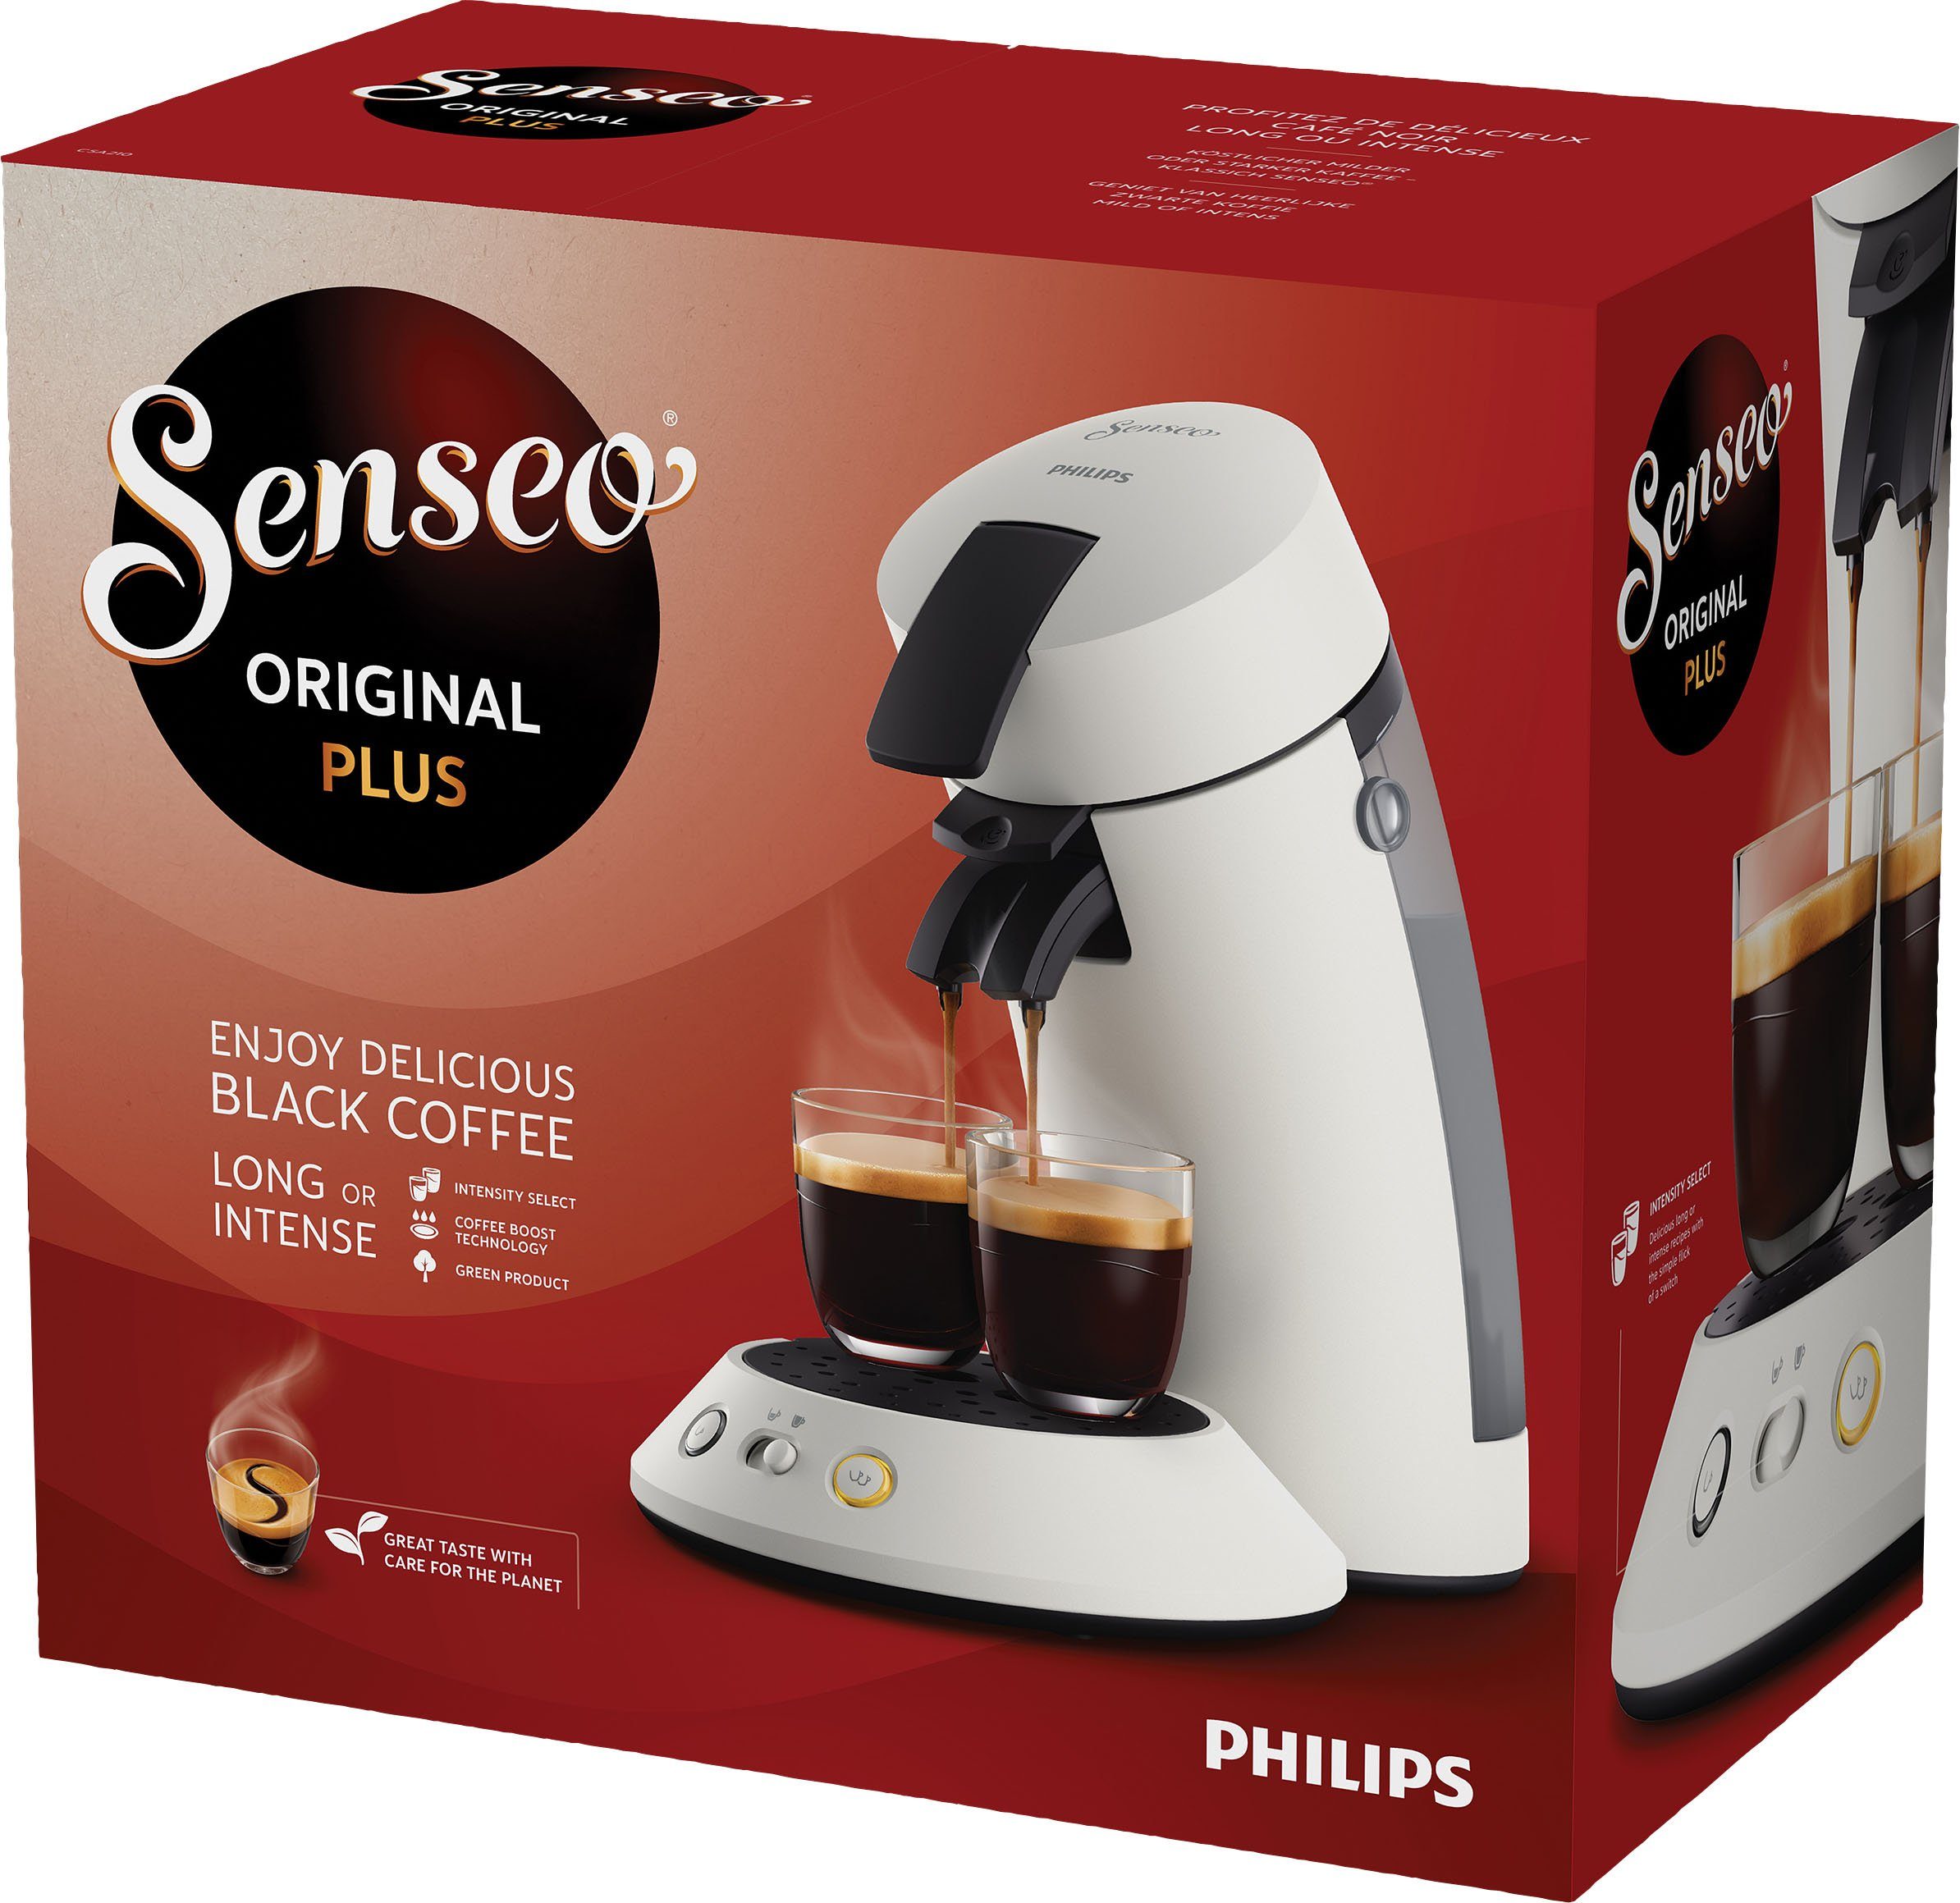 Philips Senseo Kaffeepadmaschine Original Gratis-Zugaben Kaffeespezialitäten, aus 80% Plus recyceltem Plastik, Memo-Funktion, +3 €5,-UVP) CSA210/10, (Wert